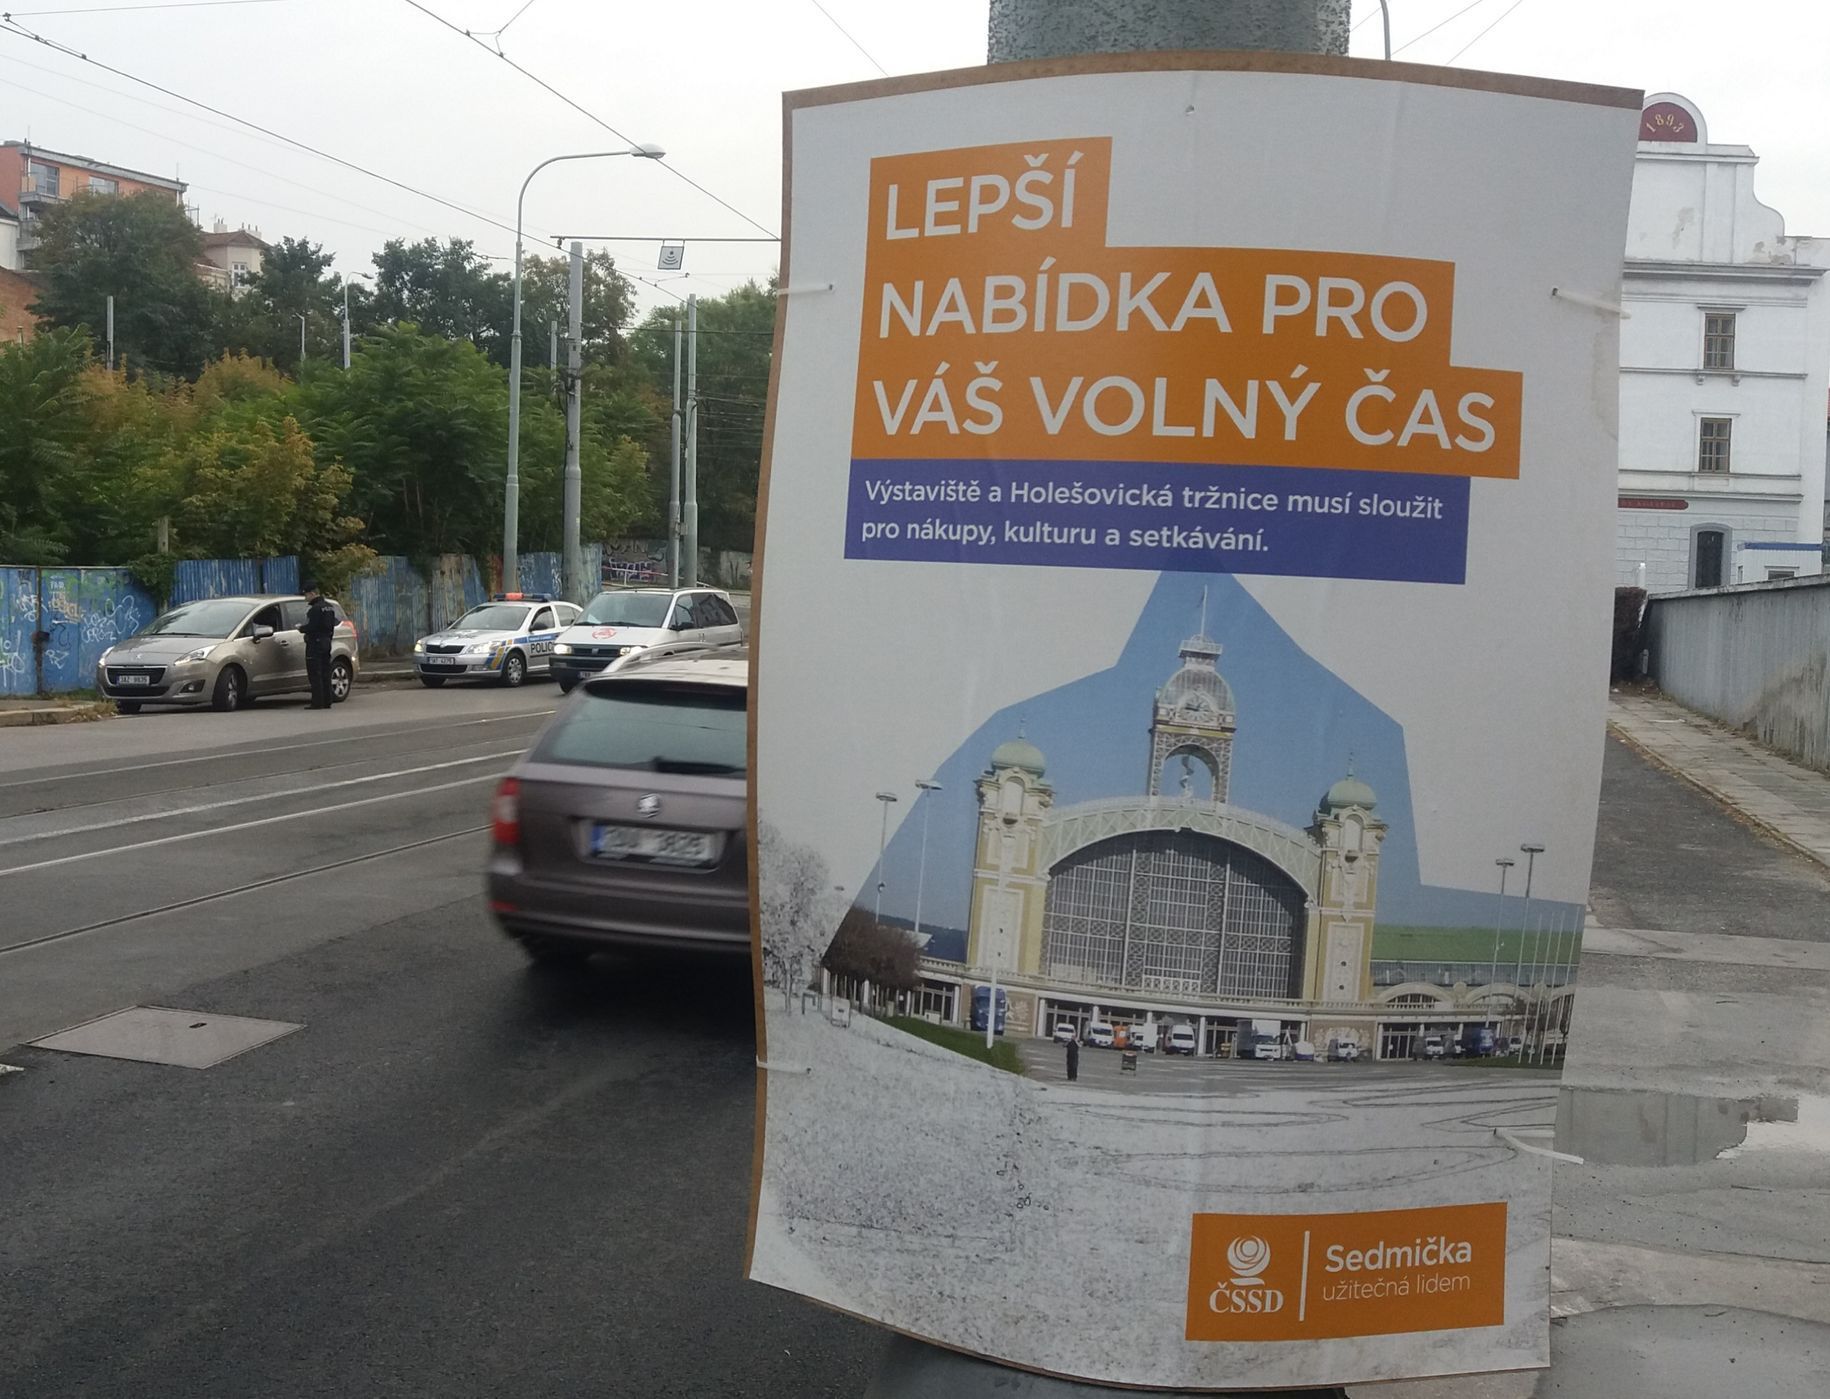 Volby 2018, Praha, lepší nabídka pro vás volný čas, ČSSD